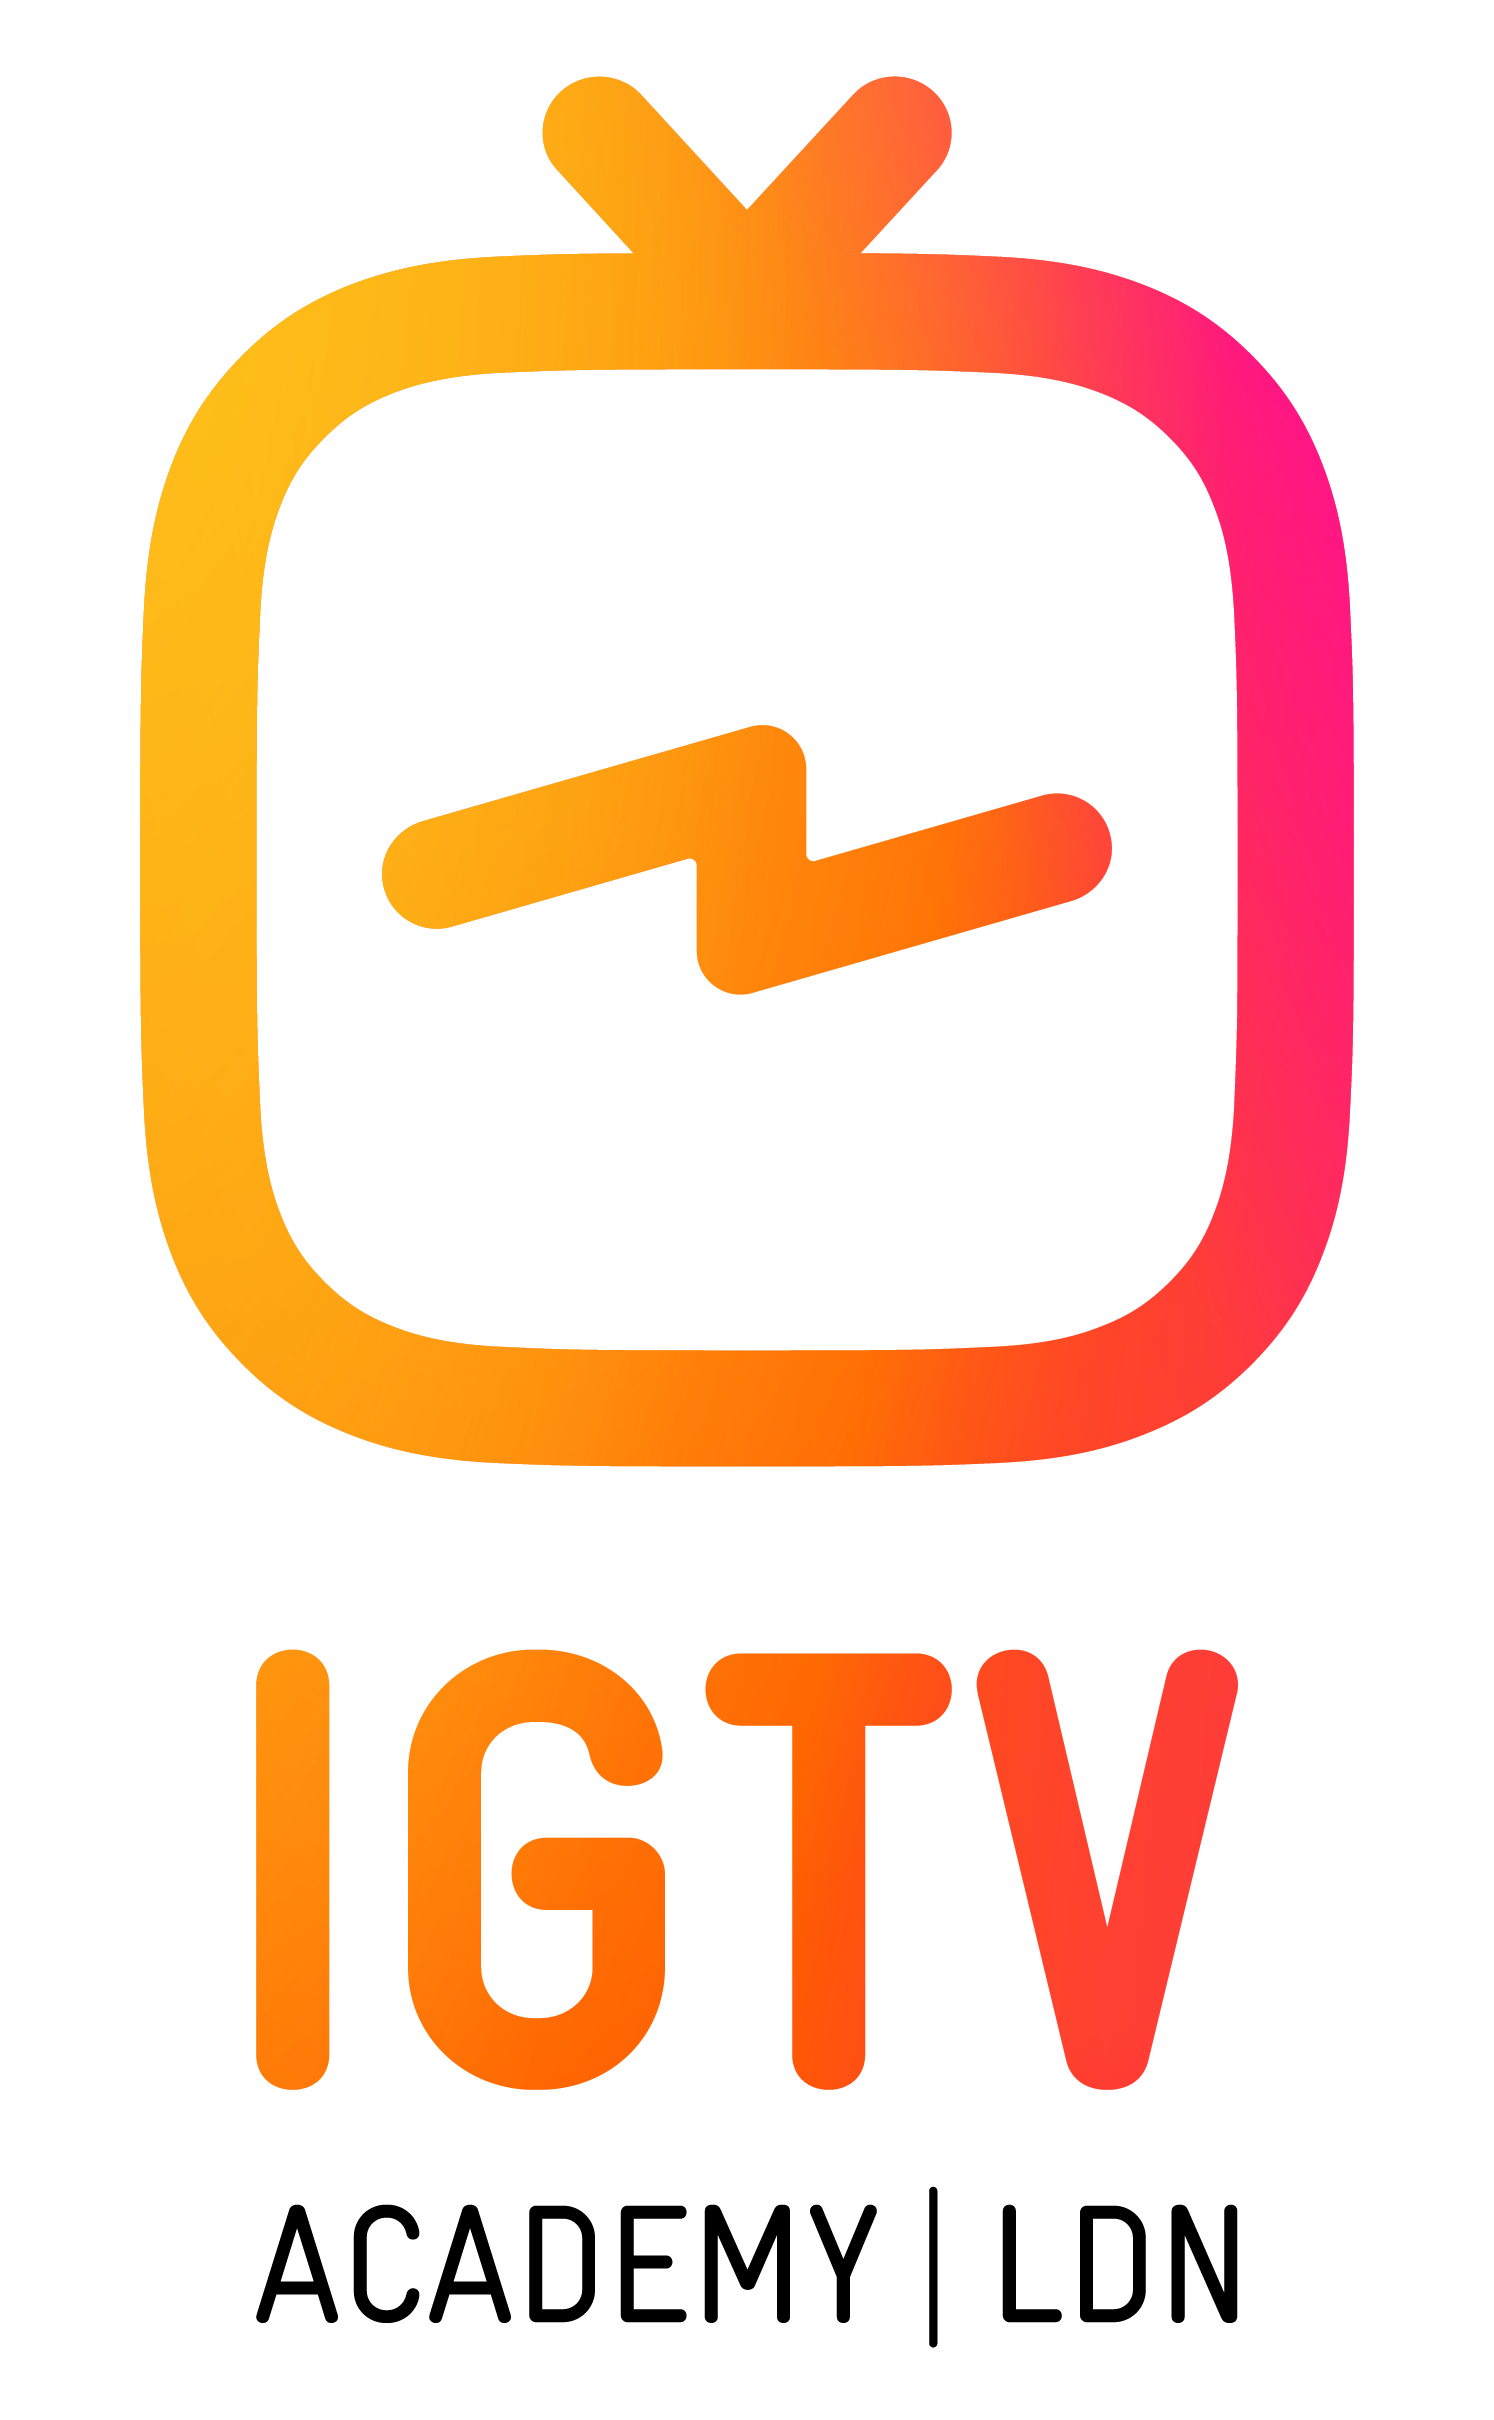 IGTV 로고 아이콘 PNG 이미지